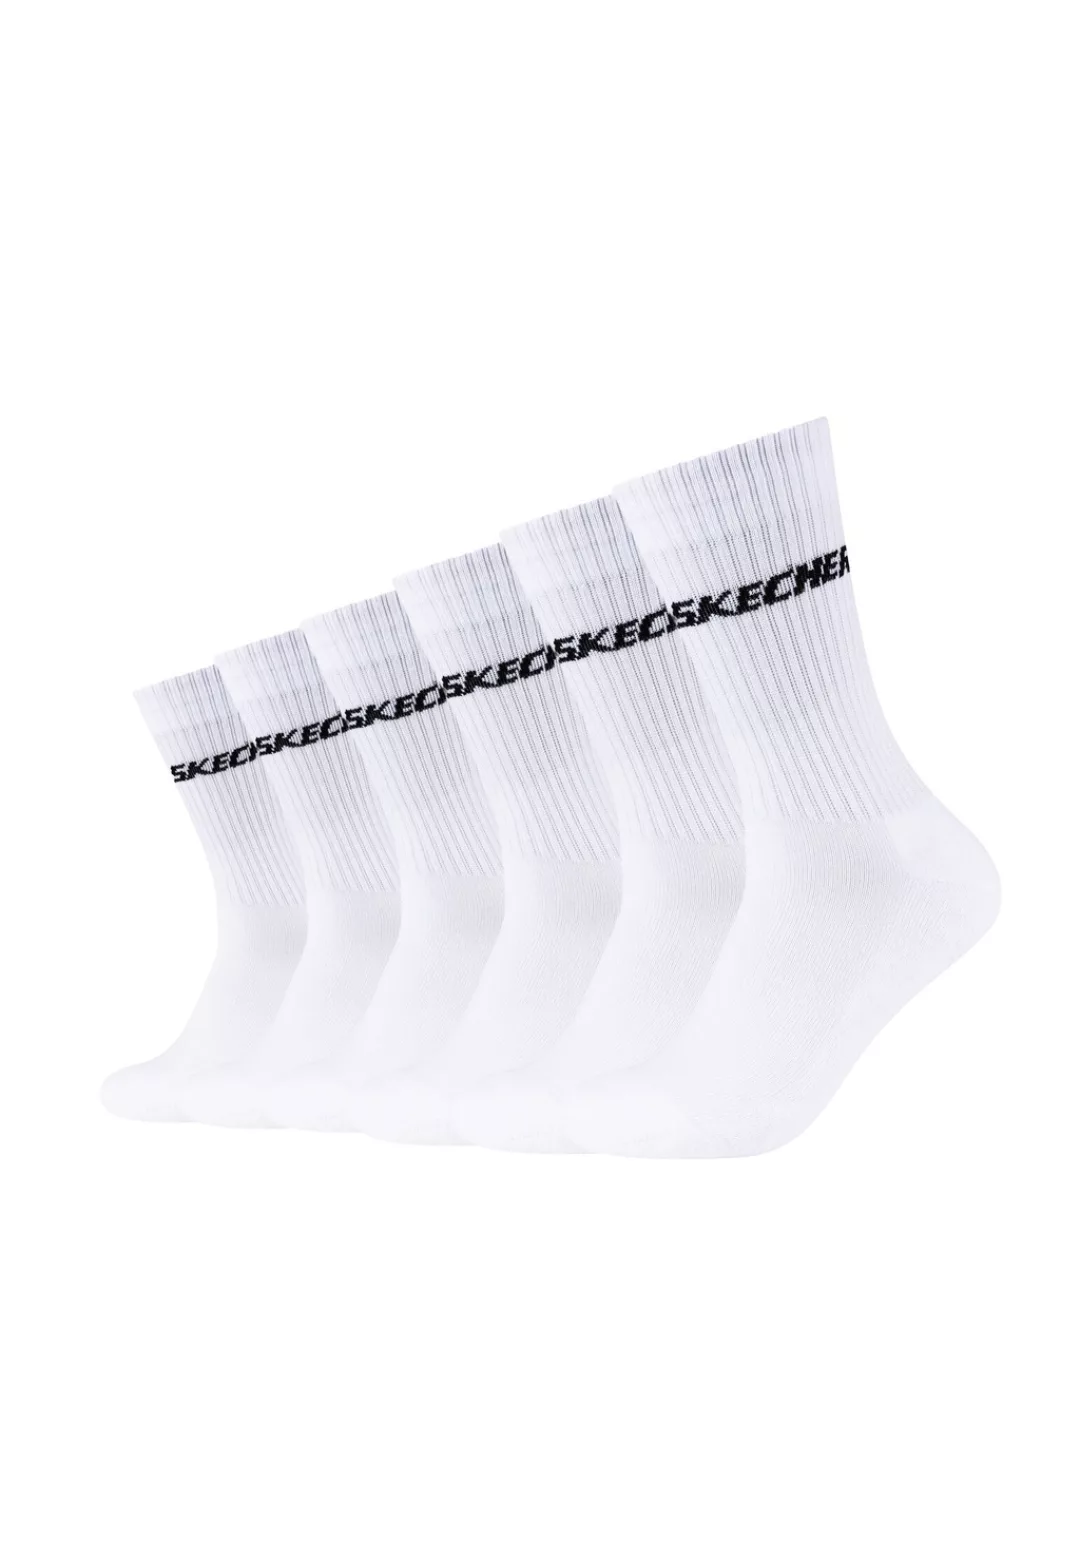 Skechers Socken "Tennissocken 6er Pack" günstig online kaufen